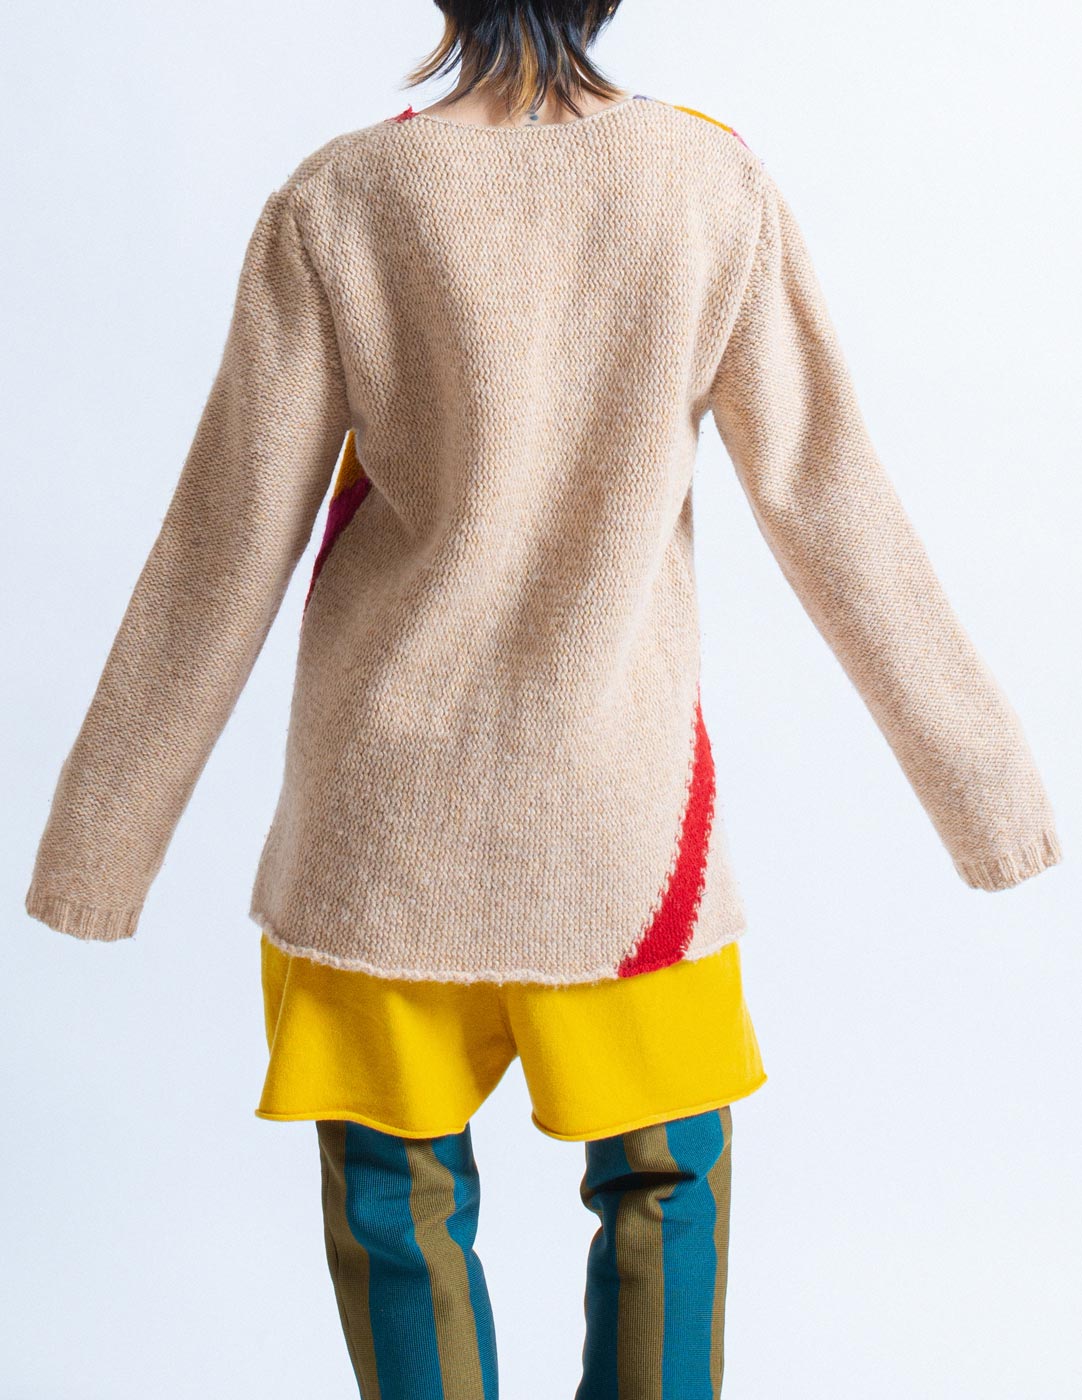 Dries Van Noten v-neck wool sweater back detail